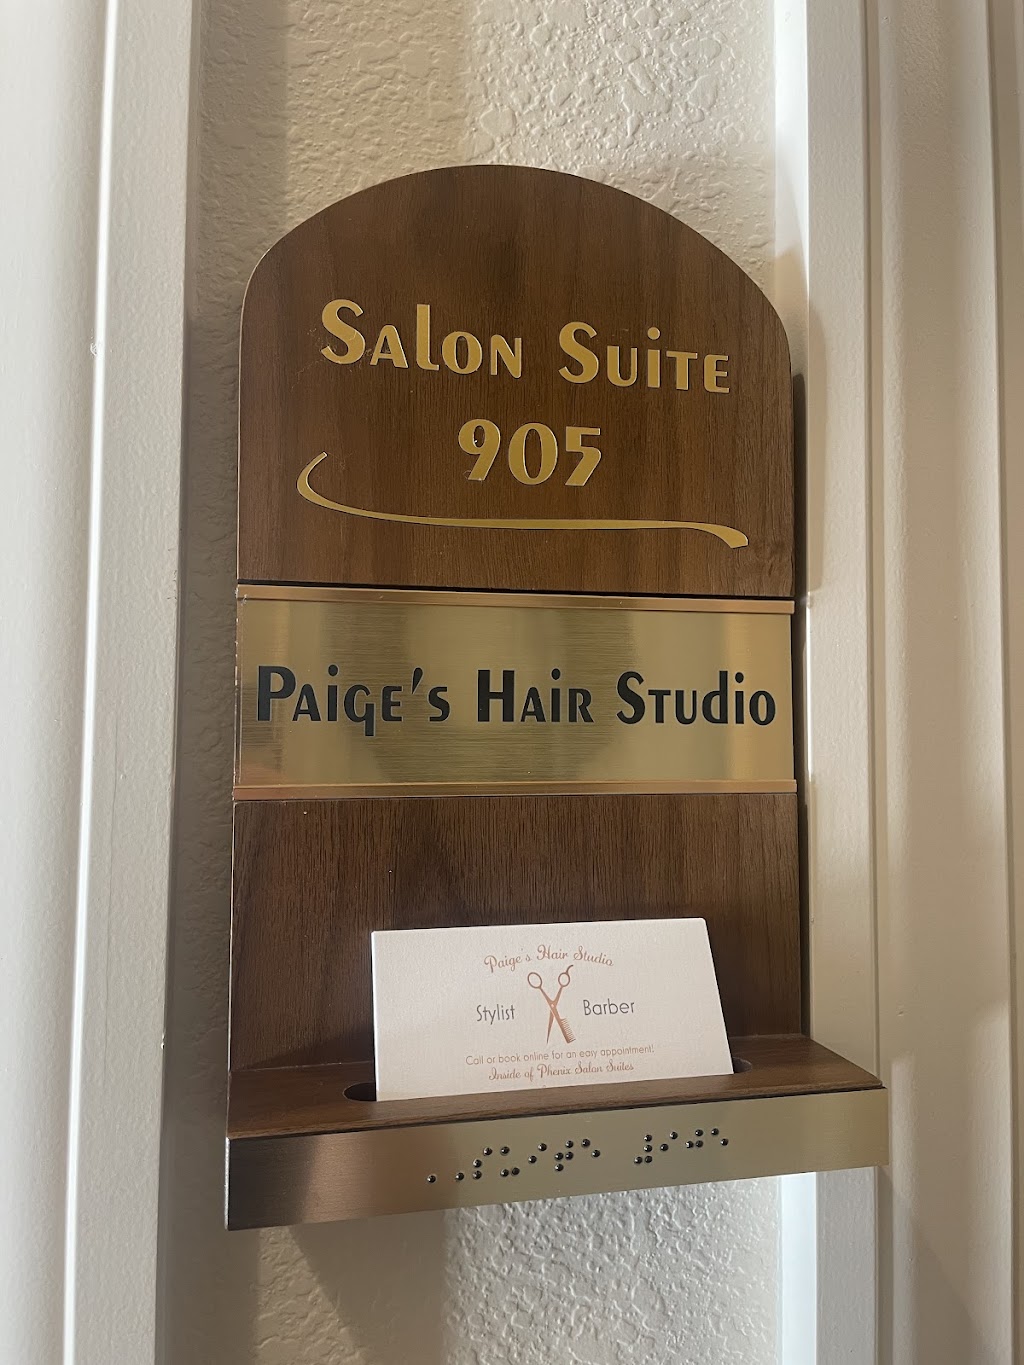 Paige’s Hair Studio | Phenix Salon Suites, 980 Shrewsbury Ave Suite 905, Tinton Falls, NJ 07724 | Phone: (908) 601-3759